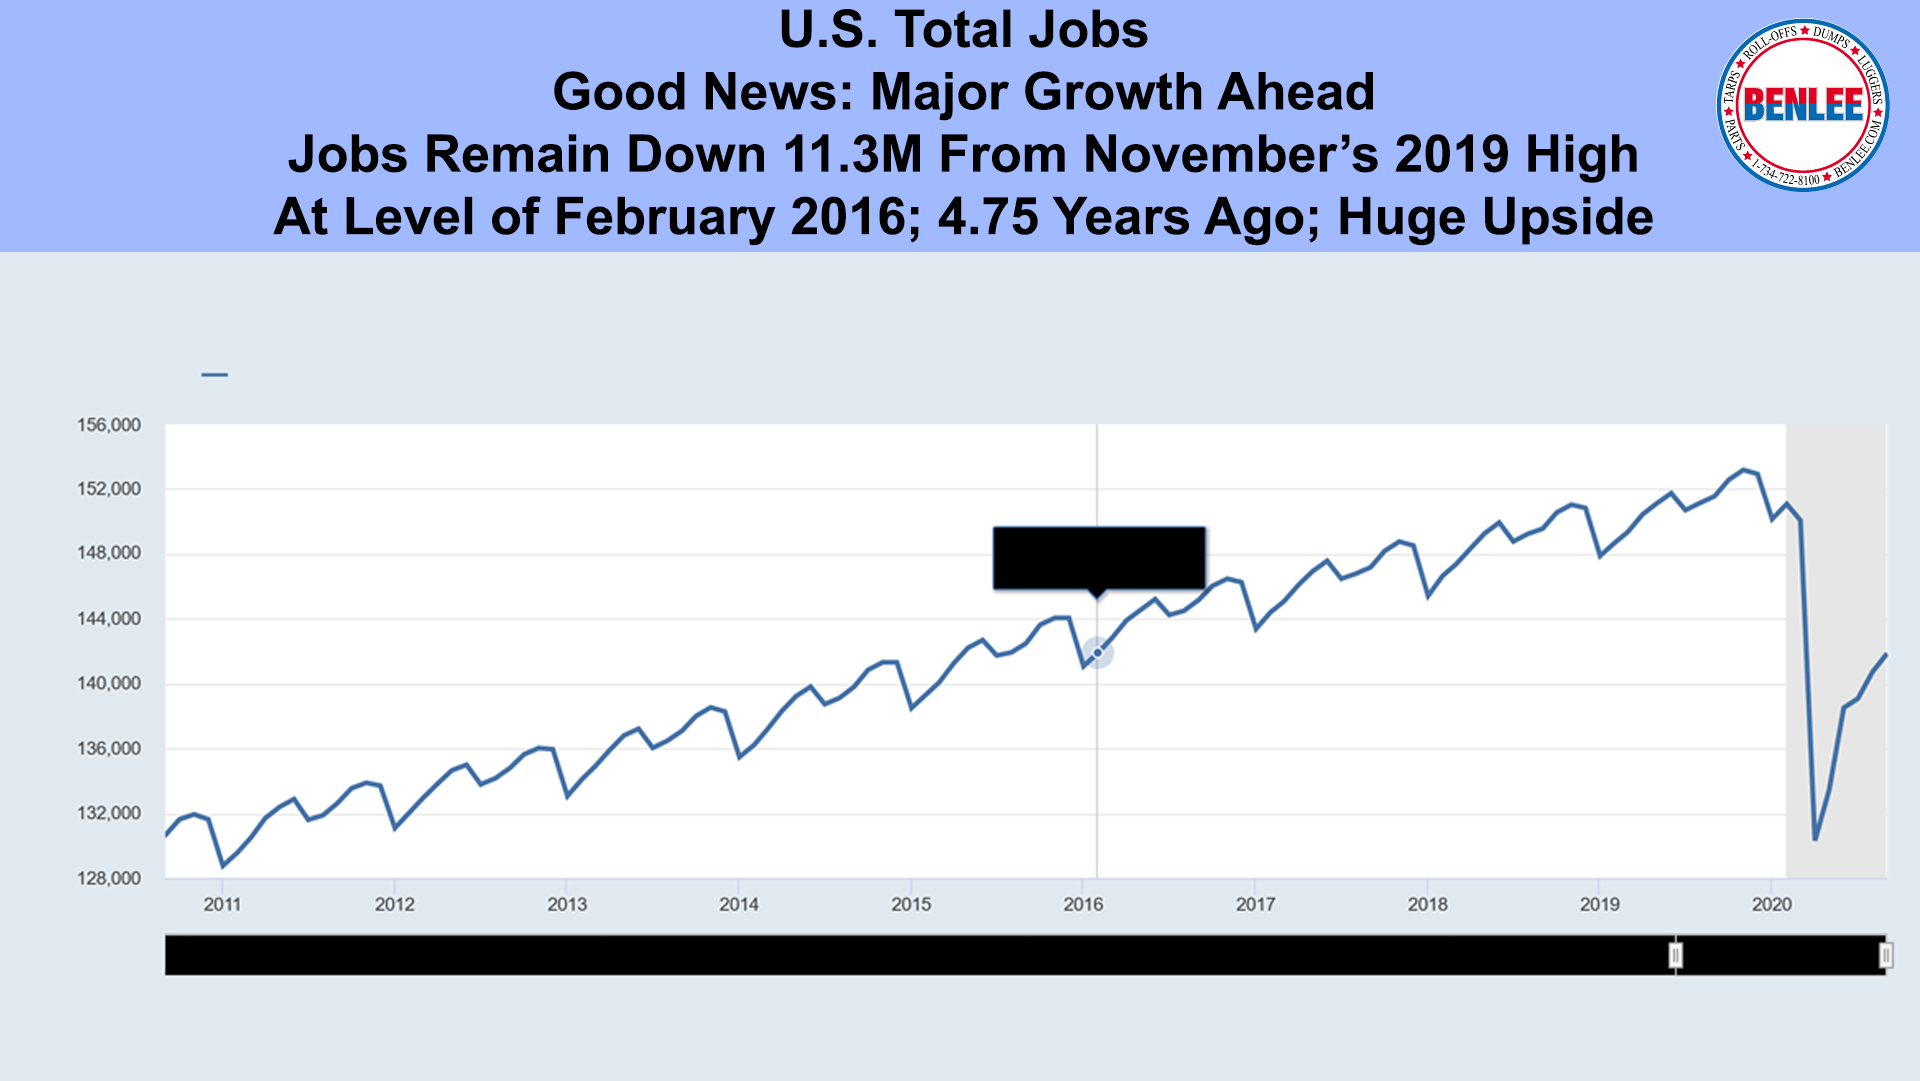 U.S. Total Jobs